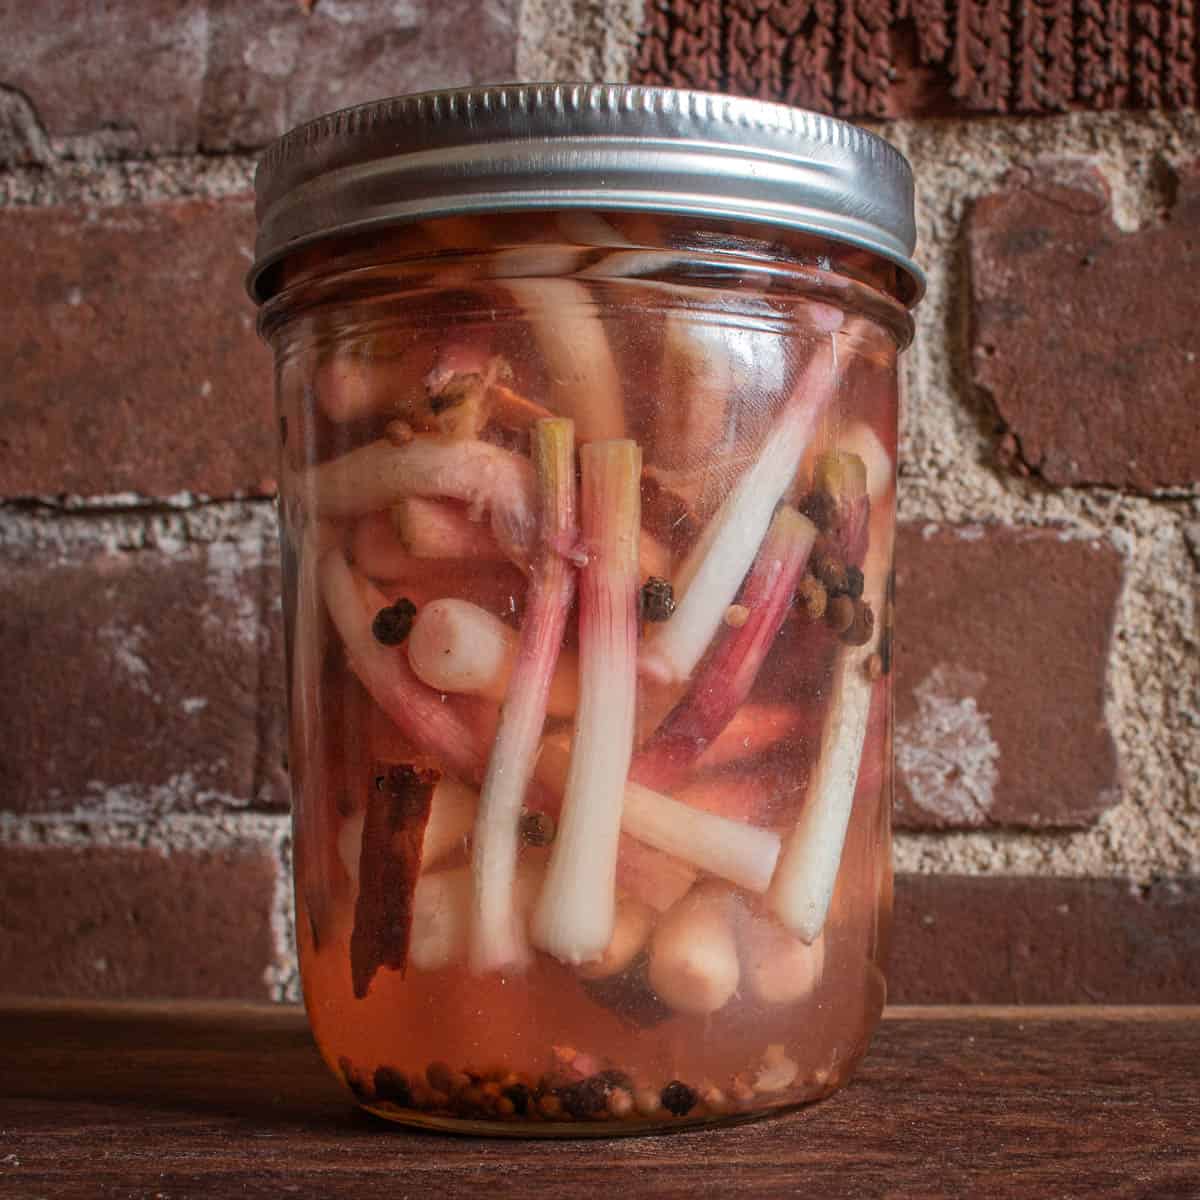 A jar of pickled ramps or wild leeks